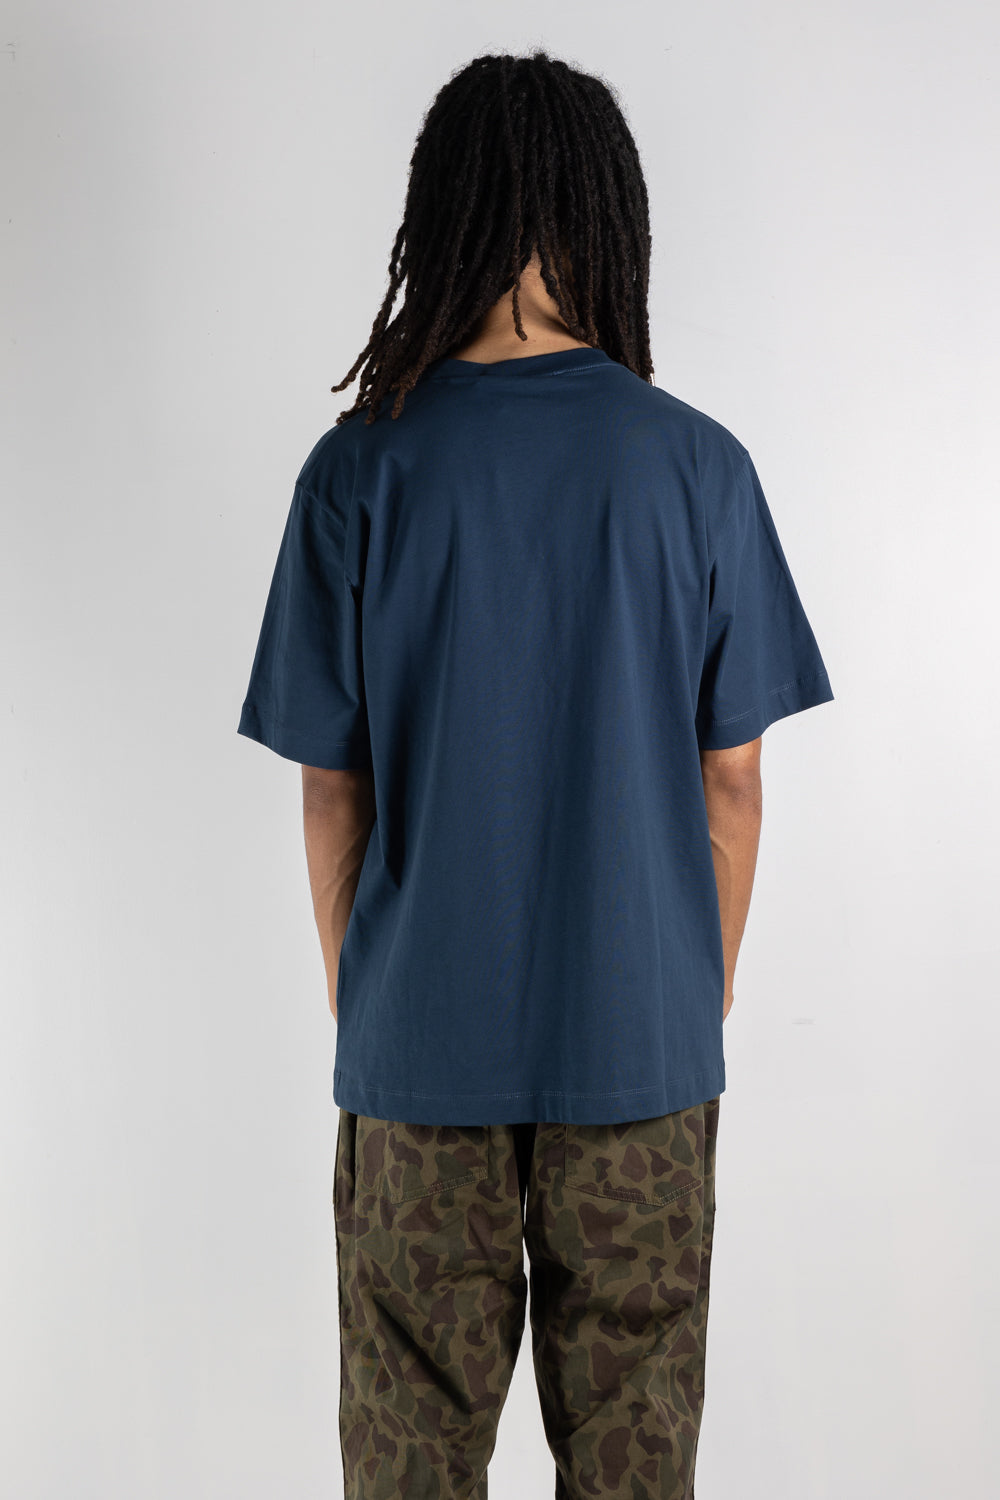 Mens Fashion T-Shirts | Etudes JMB Tee | The Standard Store